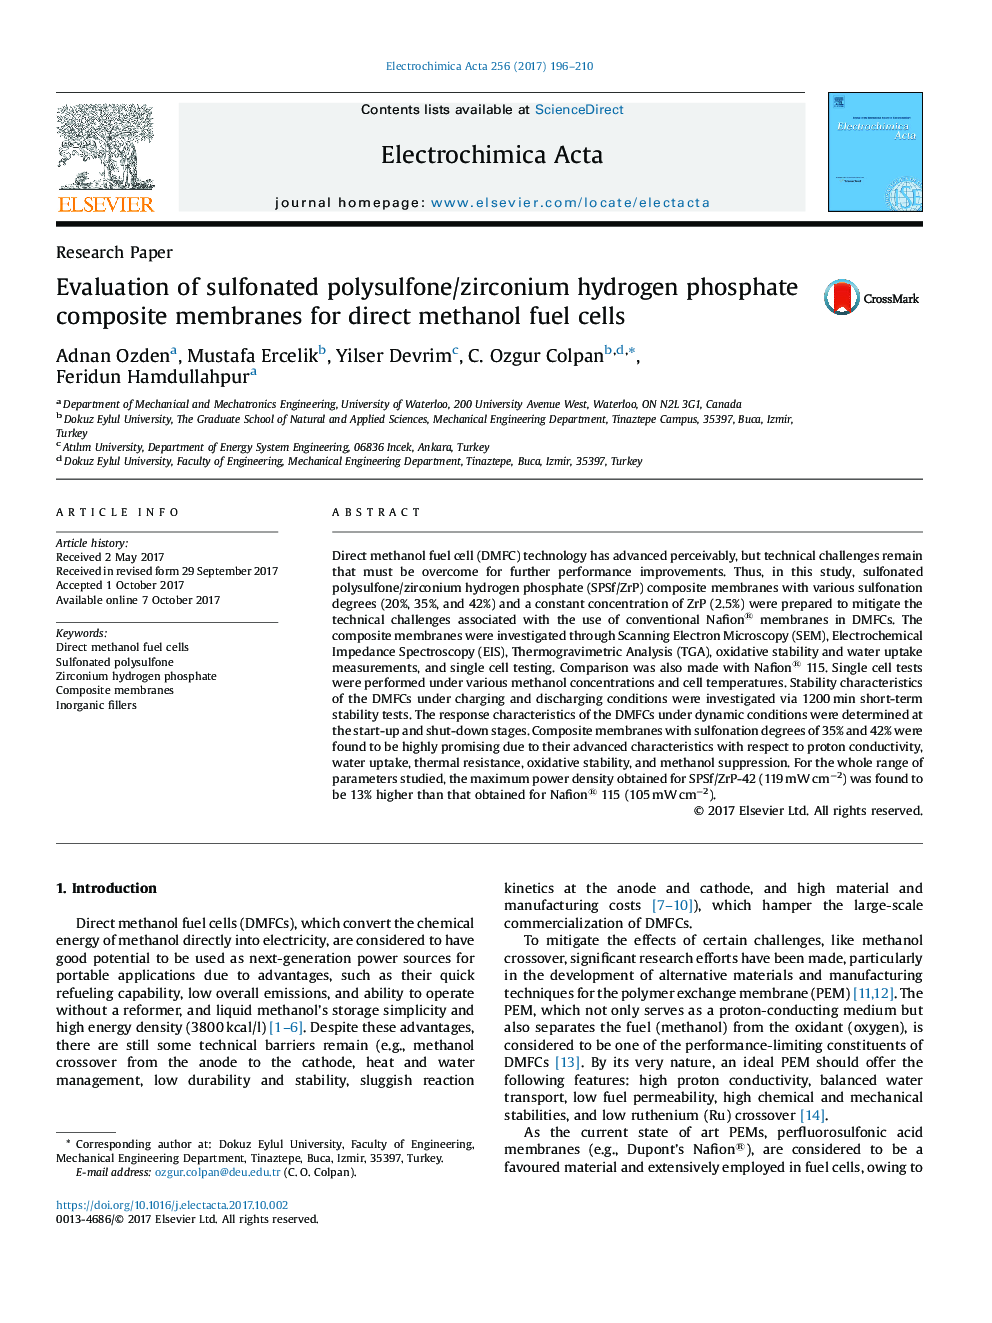 Evaluation of sulfonated polysulfone/zirconium hydrogen phosphate composite membranes for direct methanol fuel cells